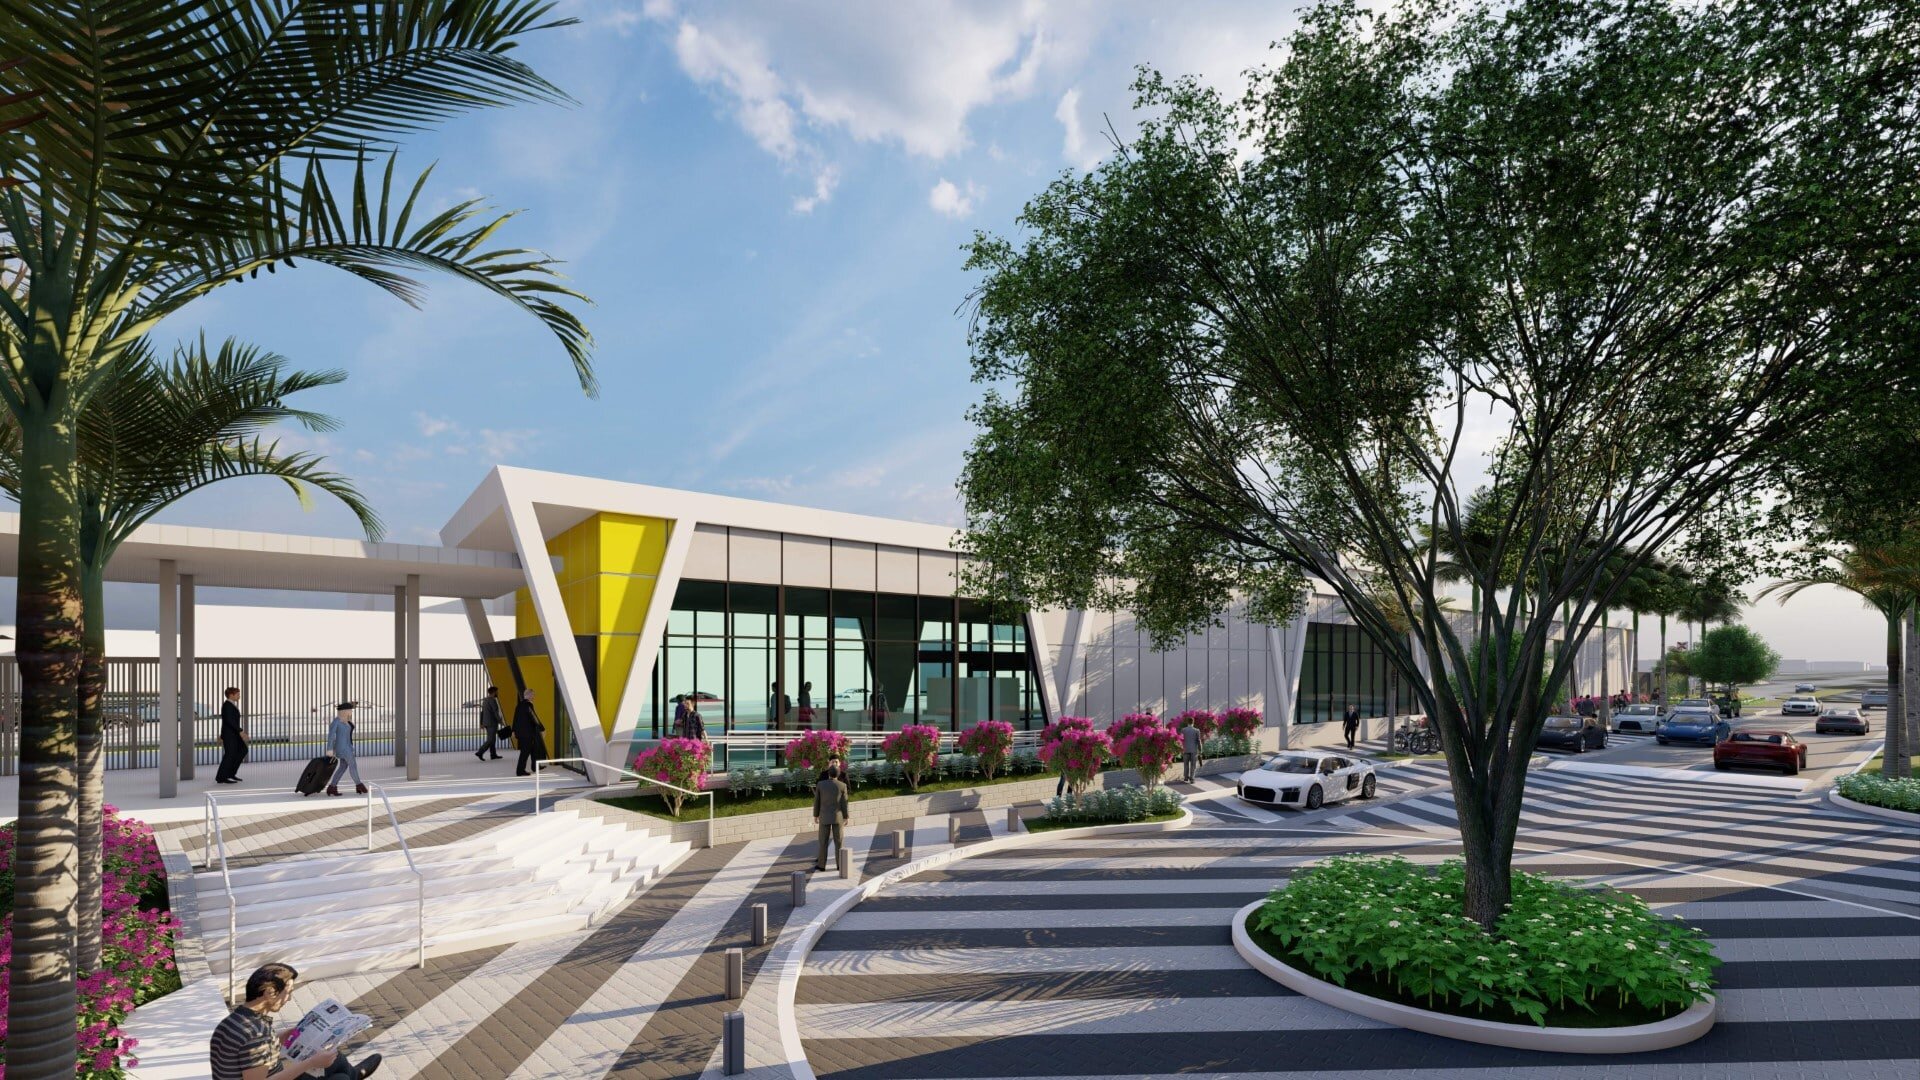 Boca Raton Station. Designed by RLC Architects.